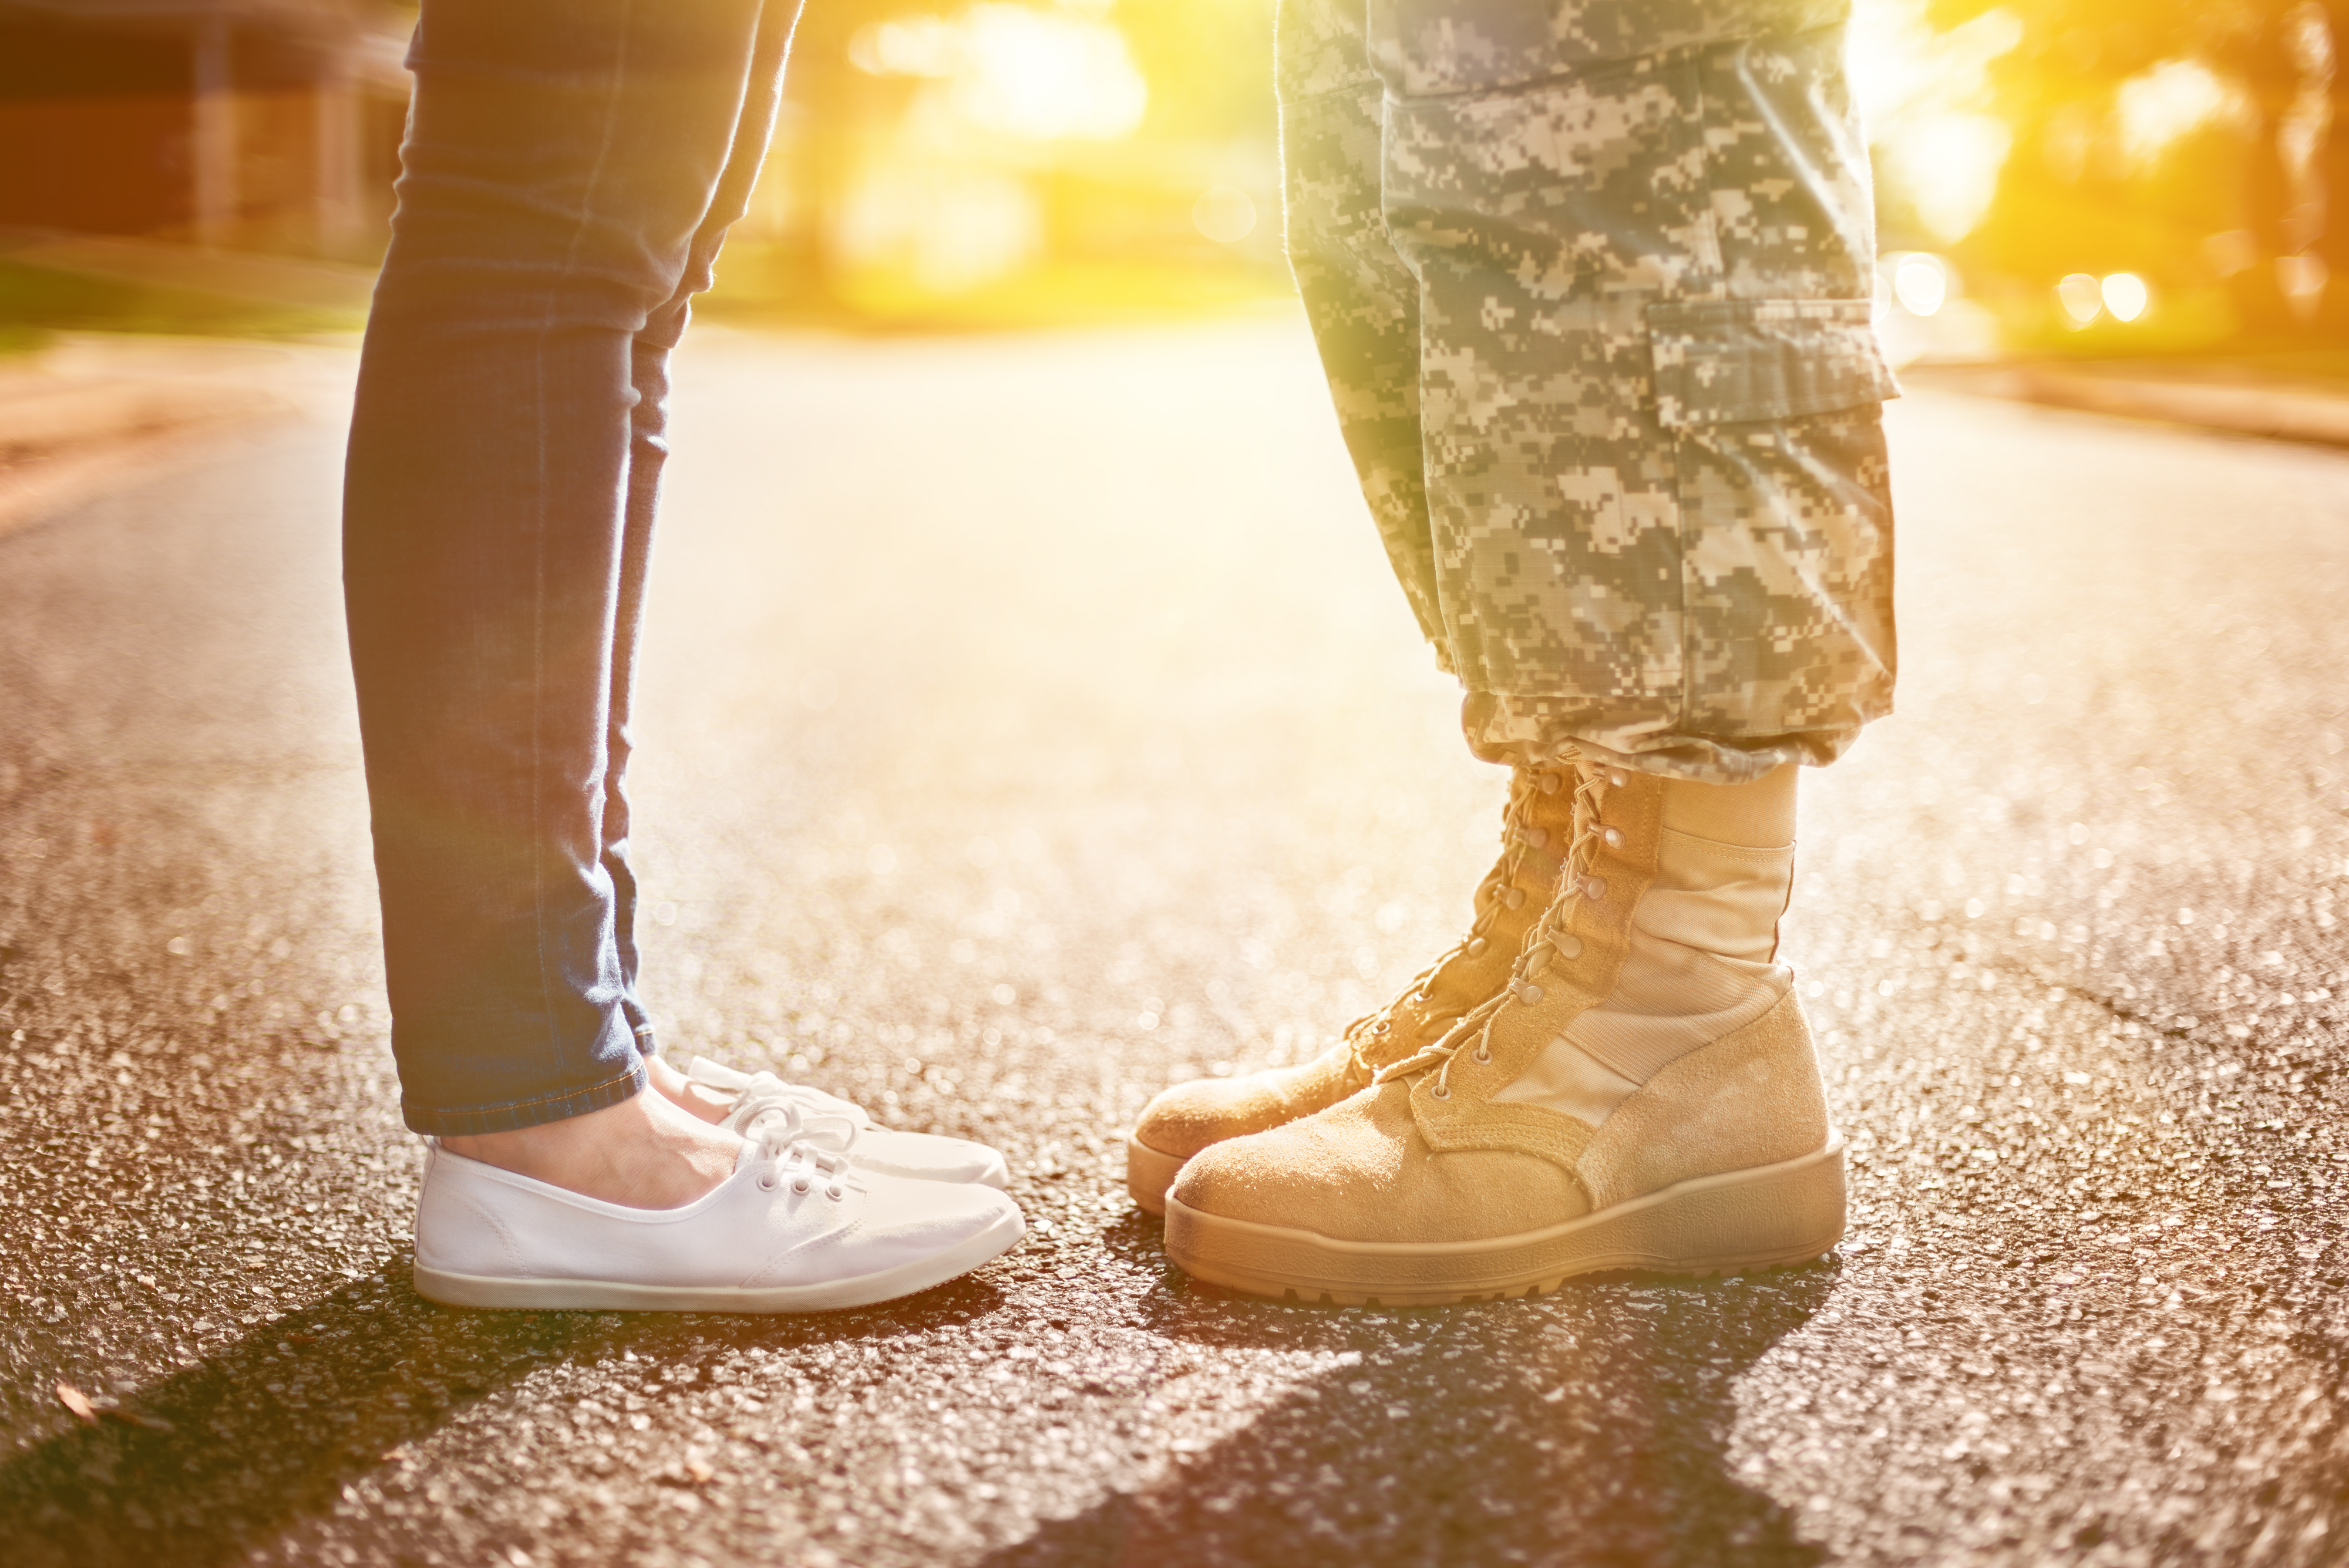 Pareja de jóvenes militares besándose. | Fuente: Shutterstock